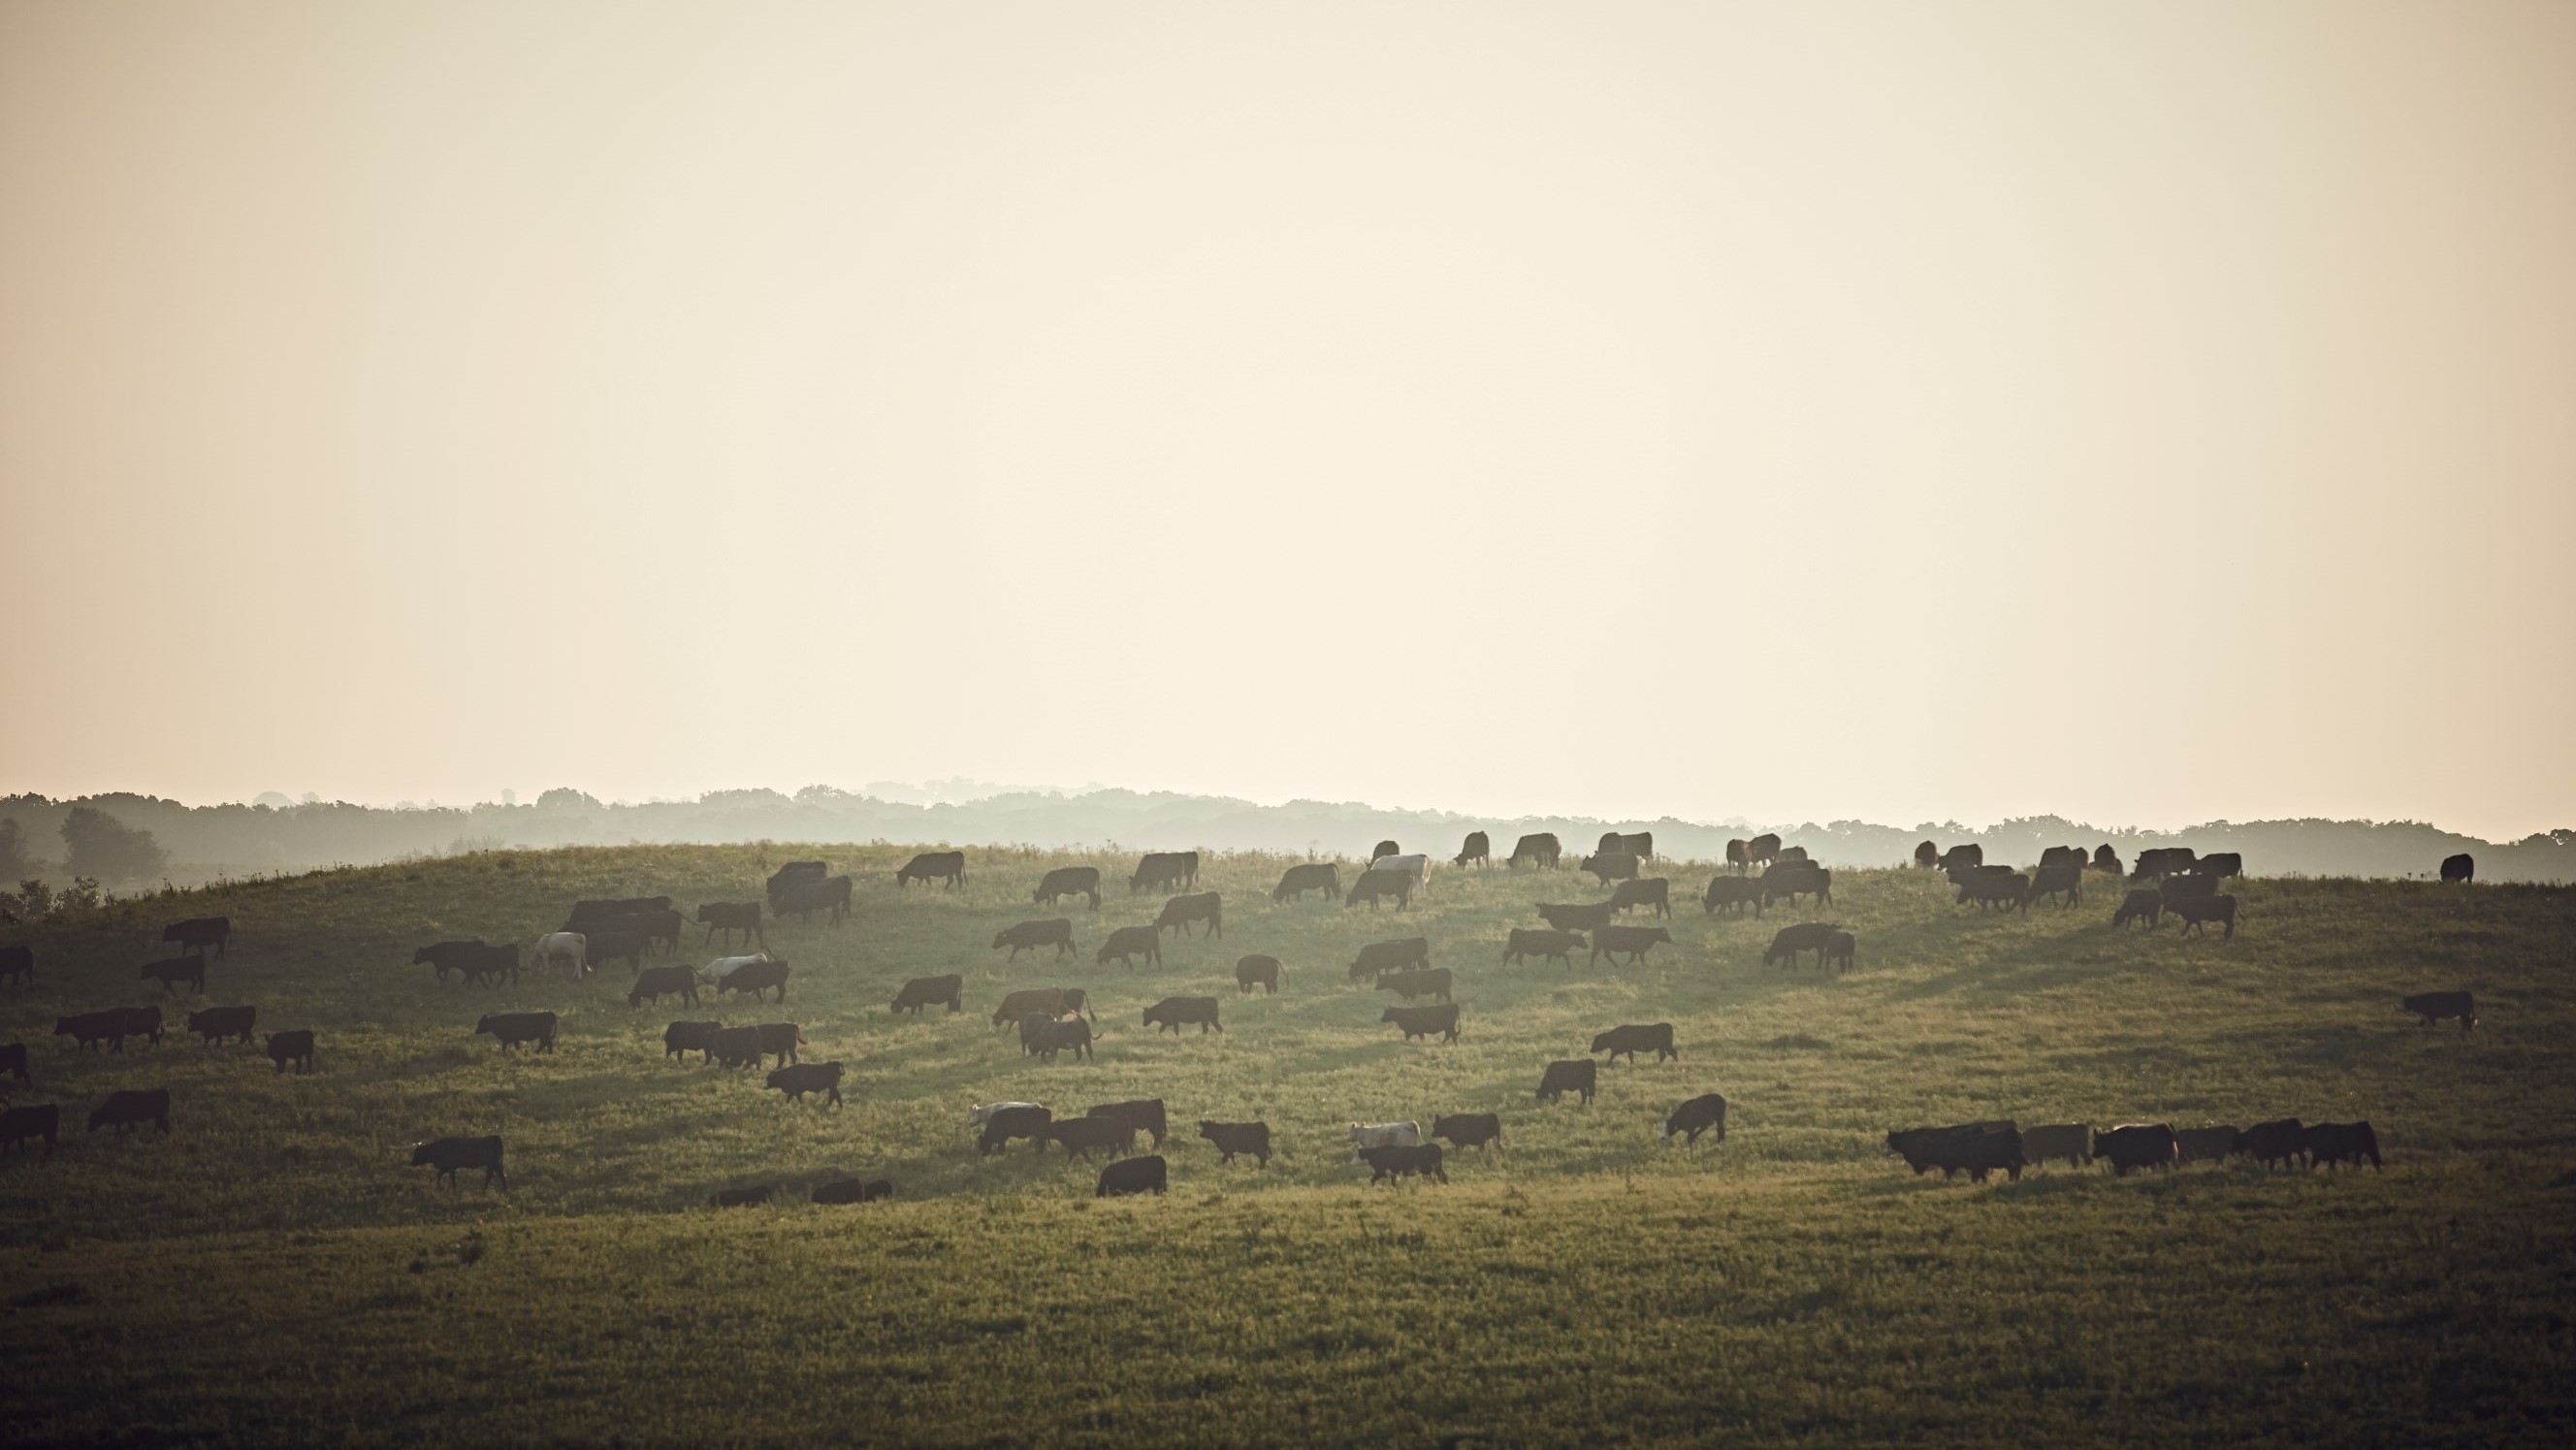 Cattle graze on a distant, grassy hillside